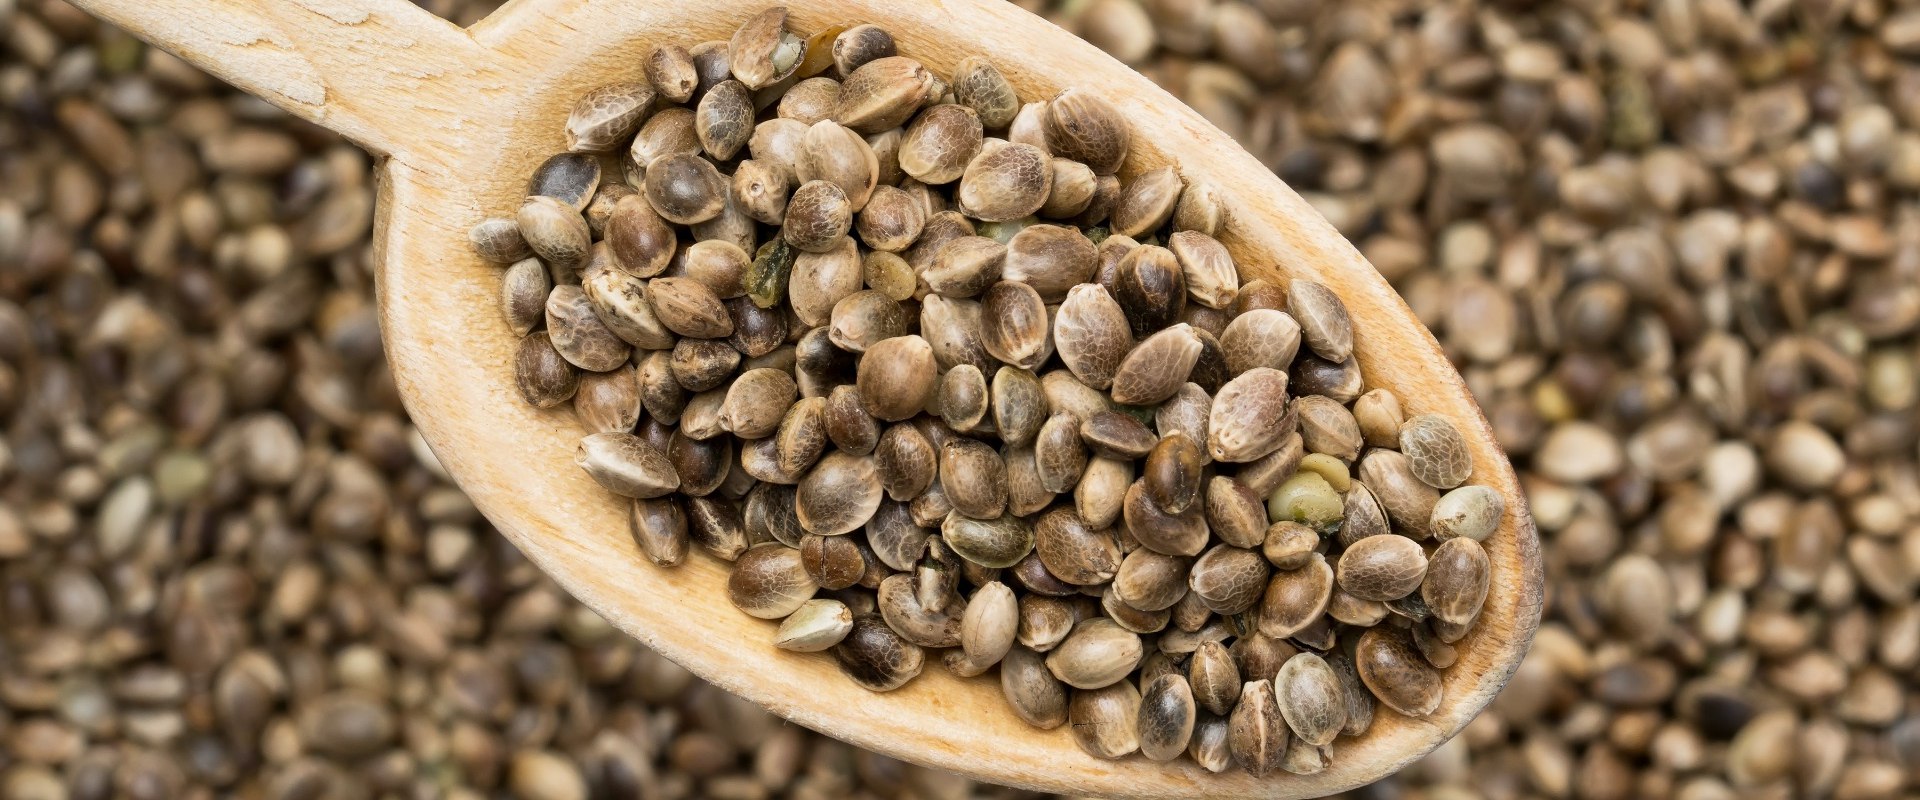 Can Eating Hemp Seeds Make You Fail a Drug Test?